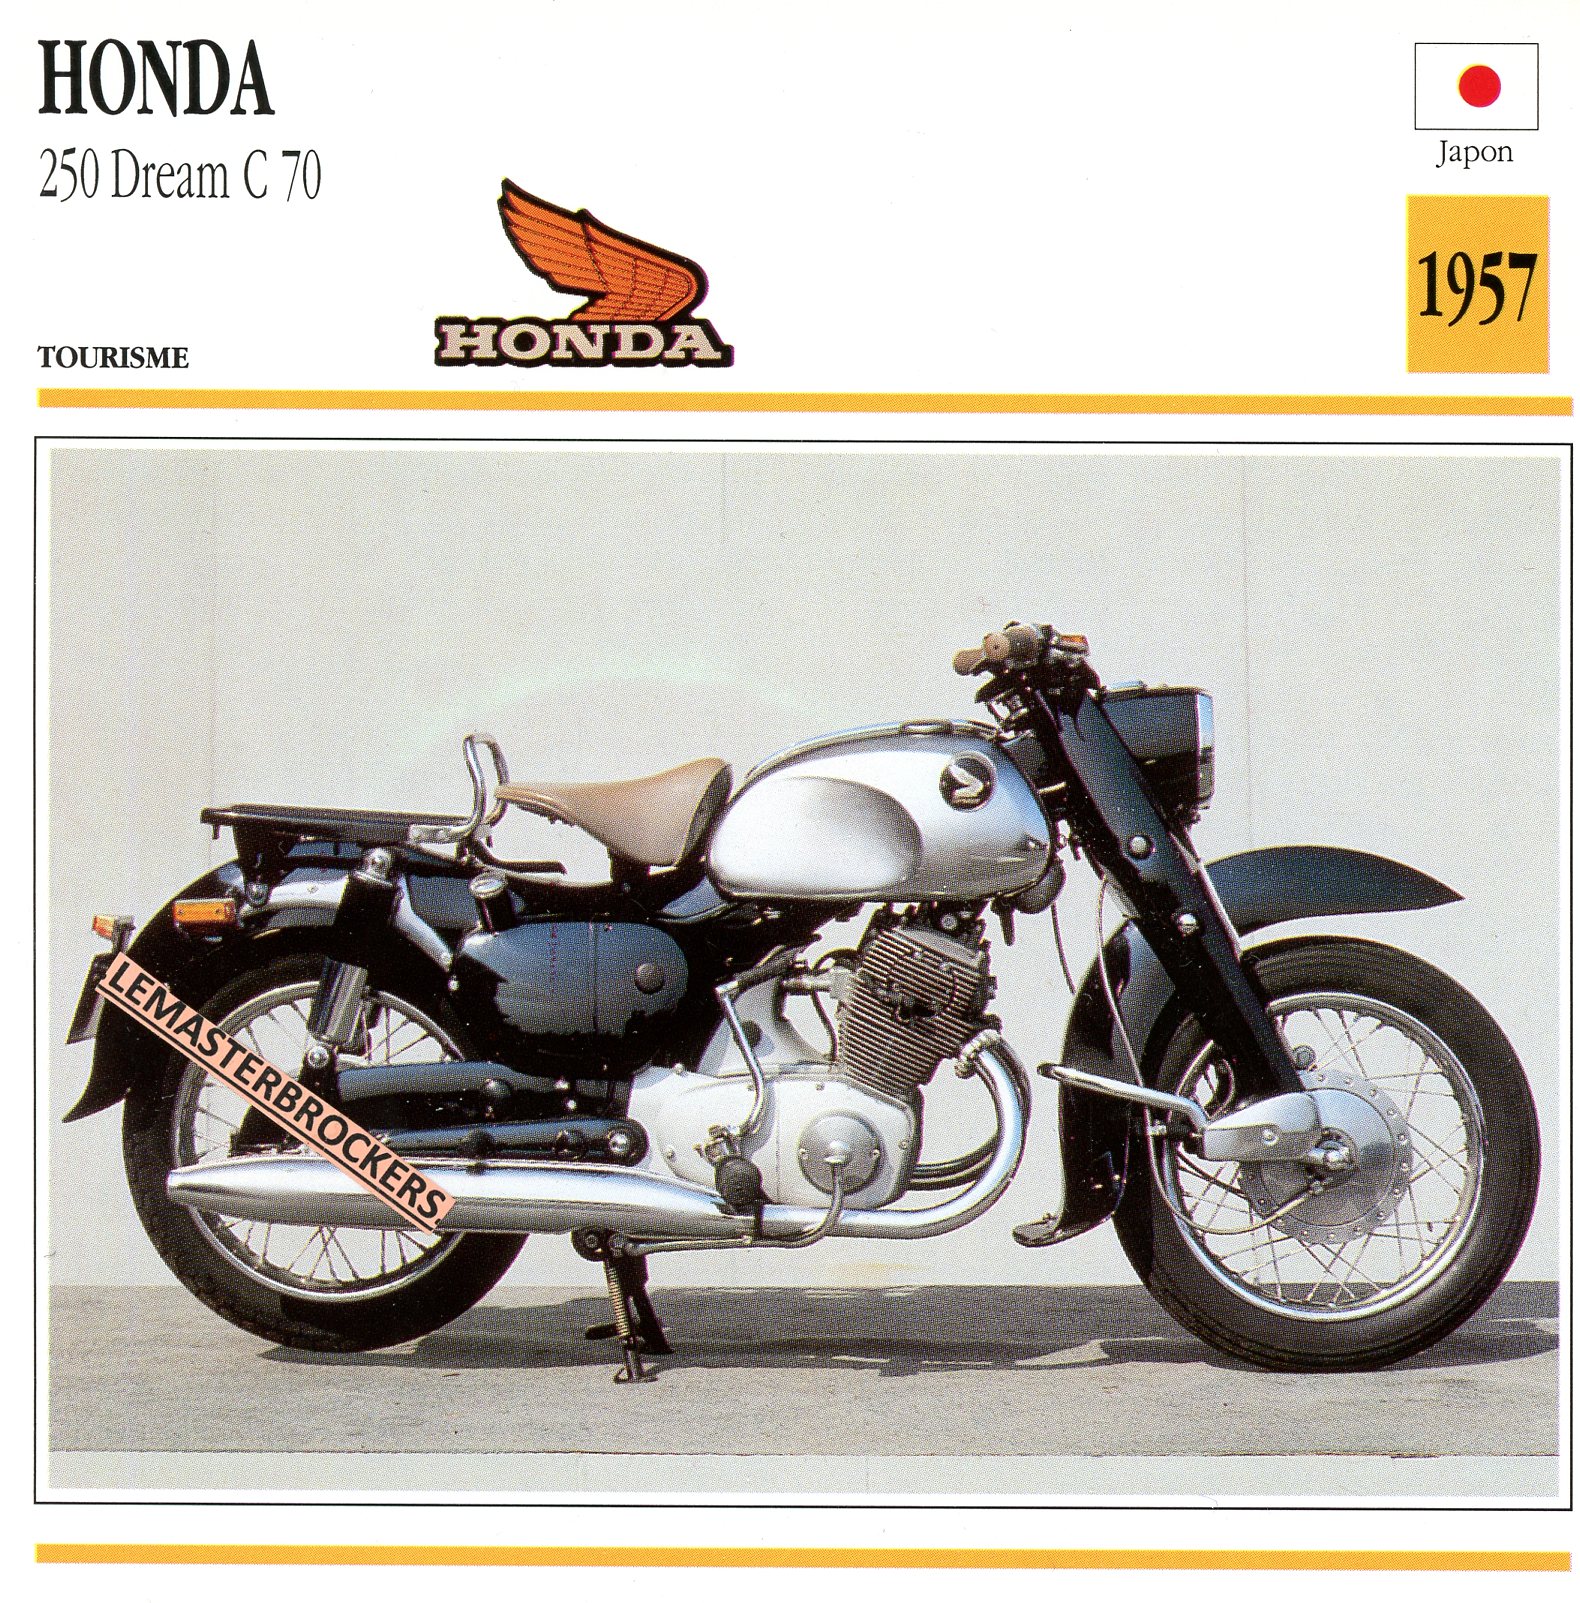 FICHE-MOTO-HONDA-250-DREAM-1957-LEMASTERBROCKERS-CARS-MOTORCYCLE